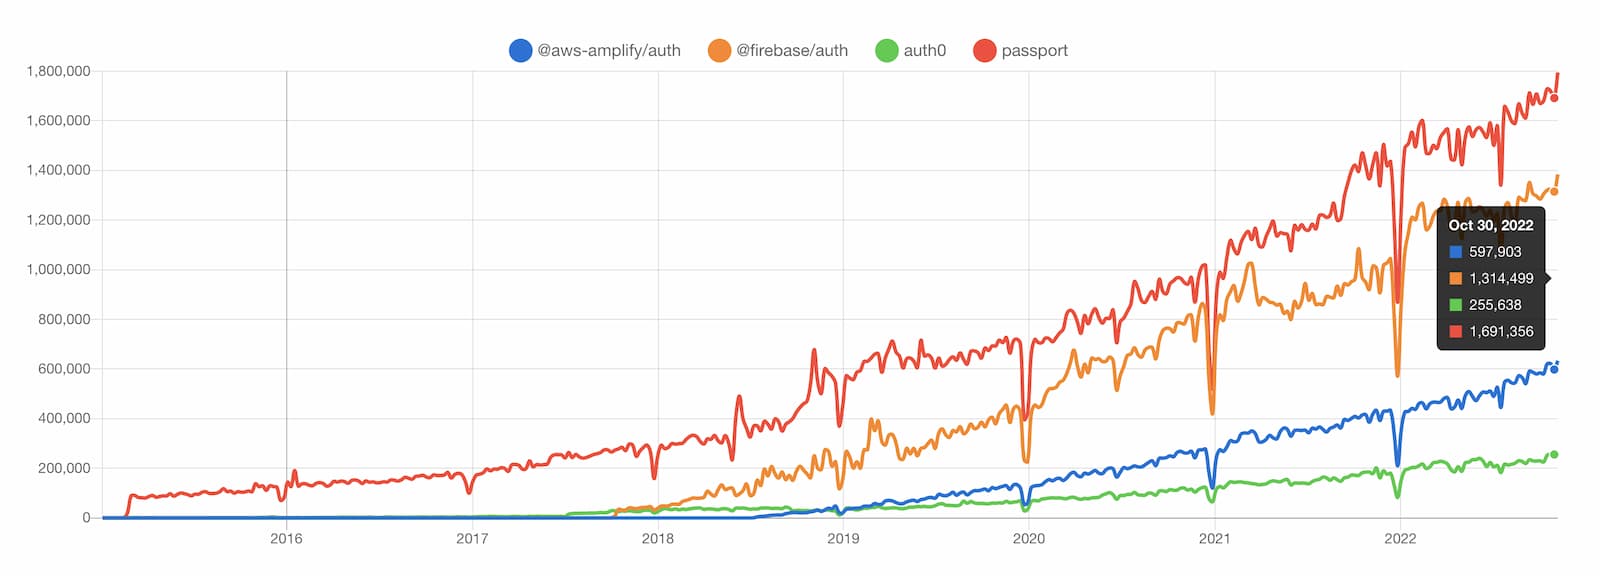 AWS Amplify Auth vs Firebase Auth vs Passport.js vs Auth0